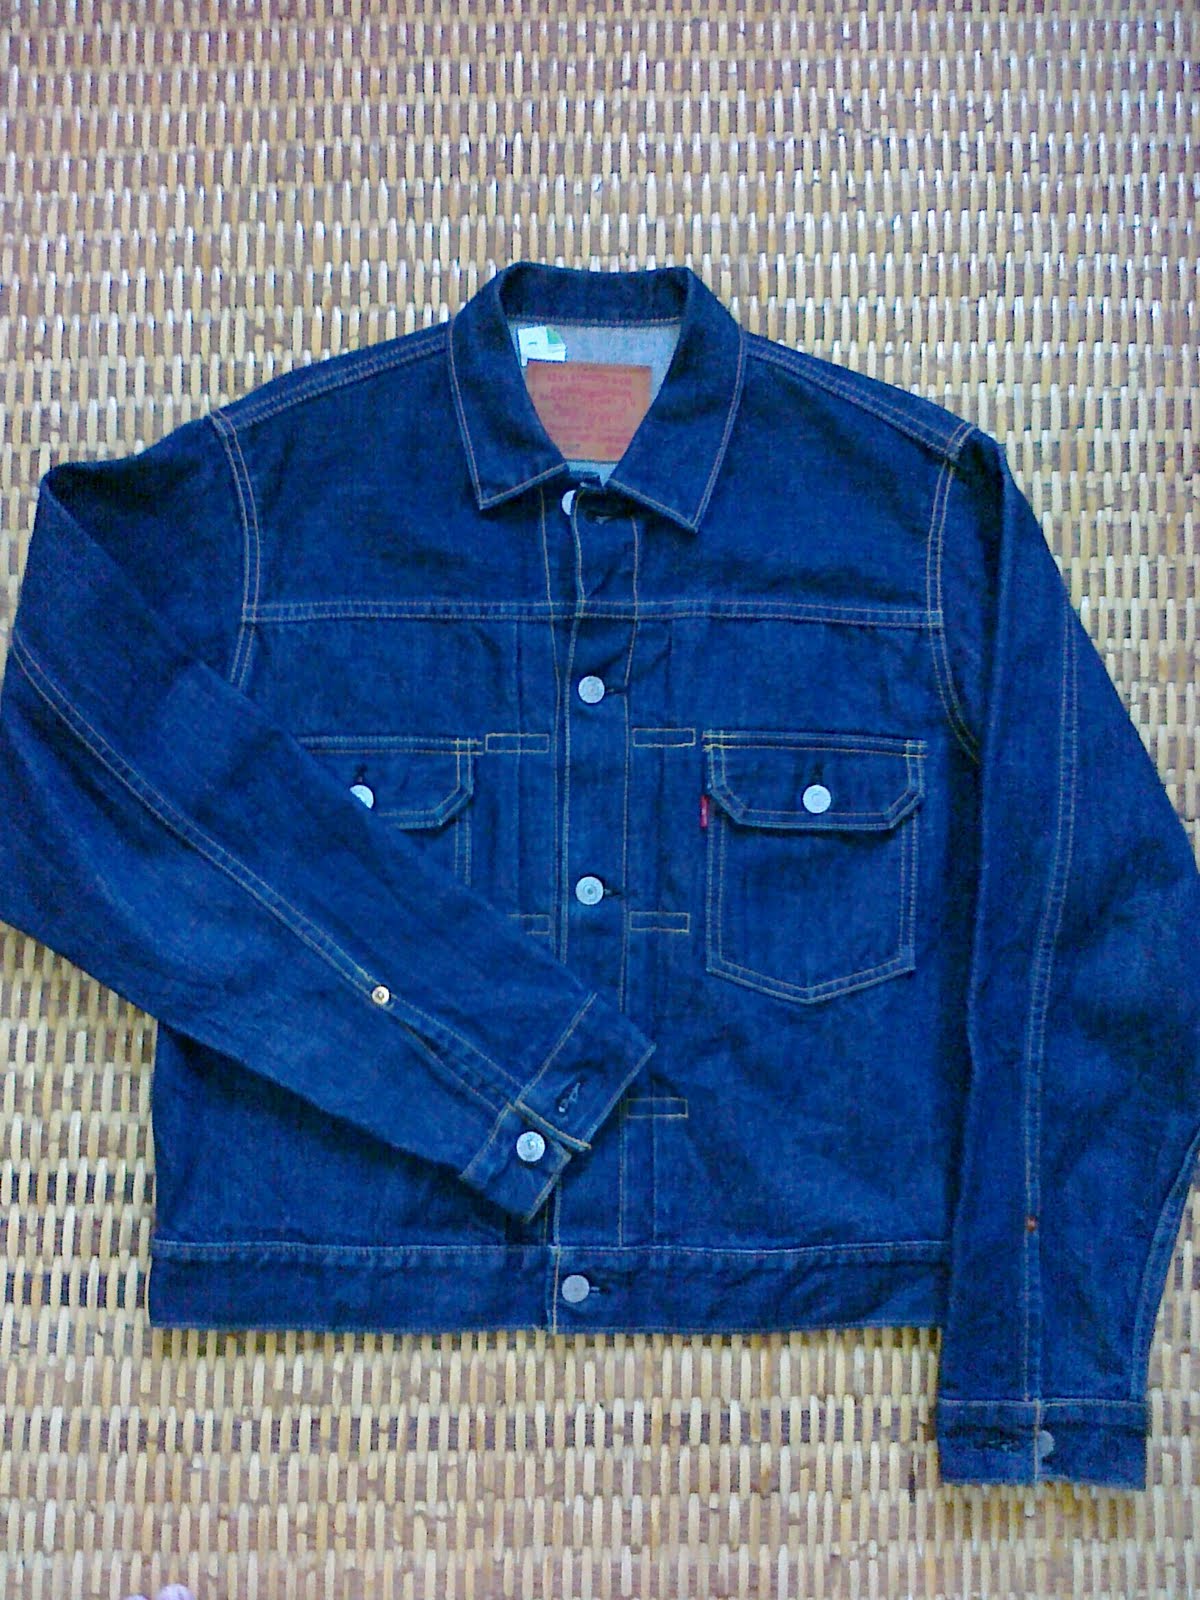 Longhorn's Vintage Clothing: [SOLD] Levi's 71507 Big E Type-2 Jacket